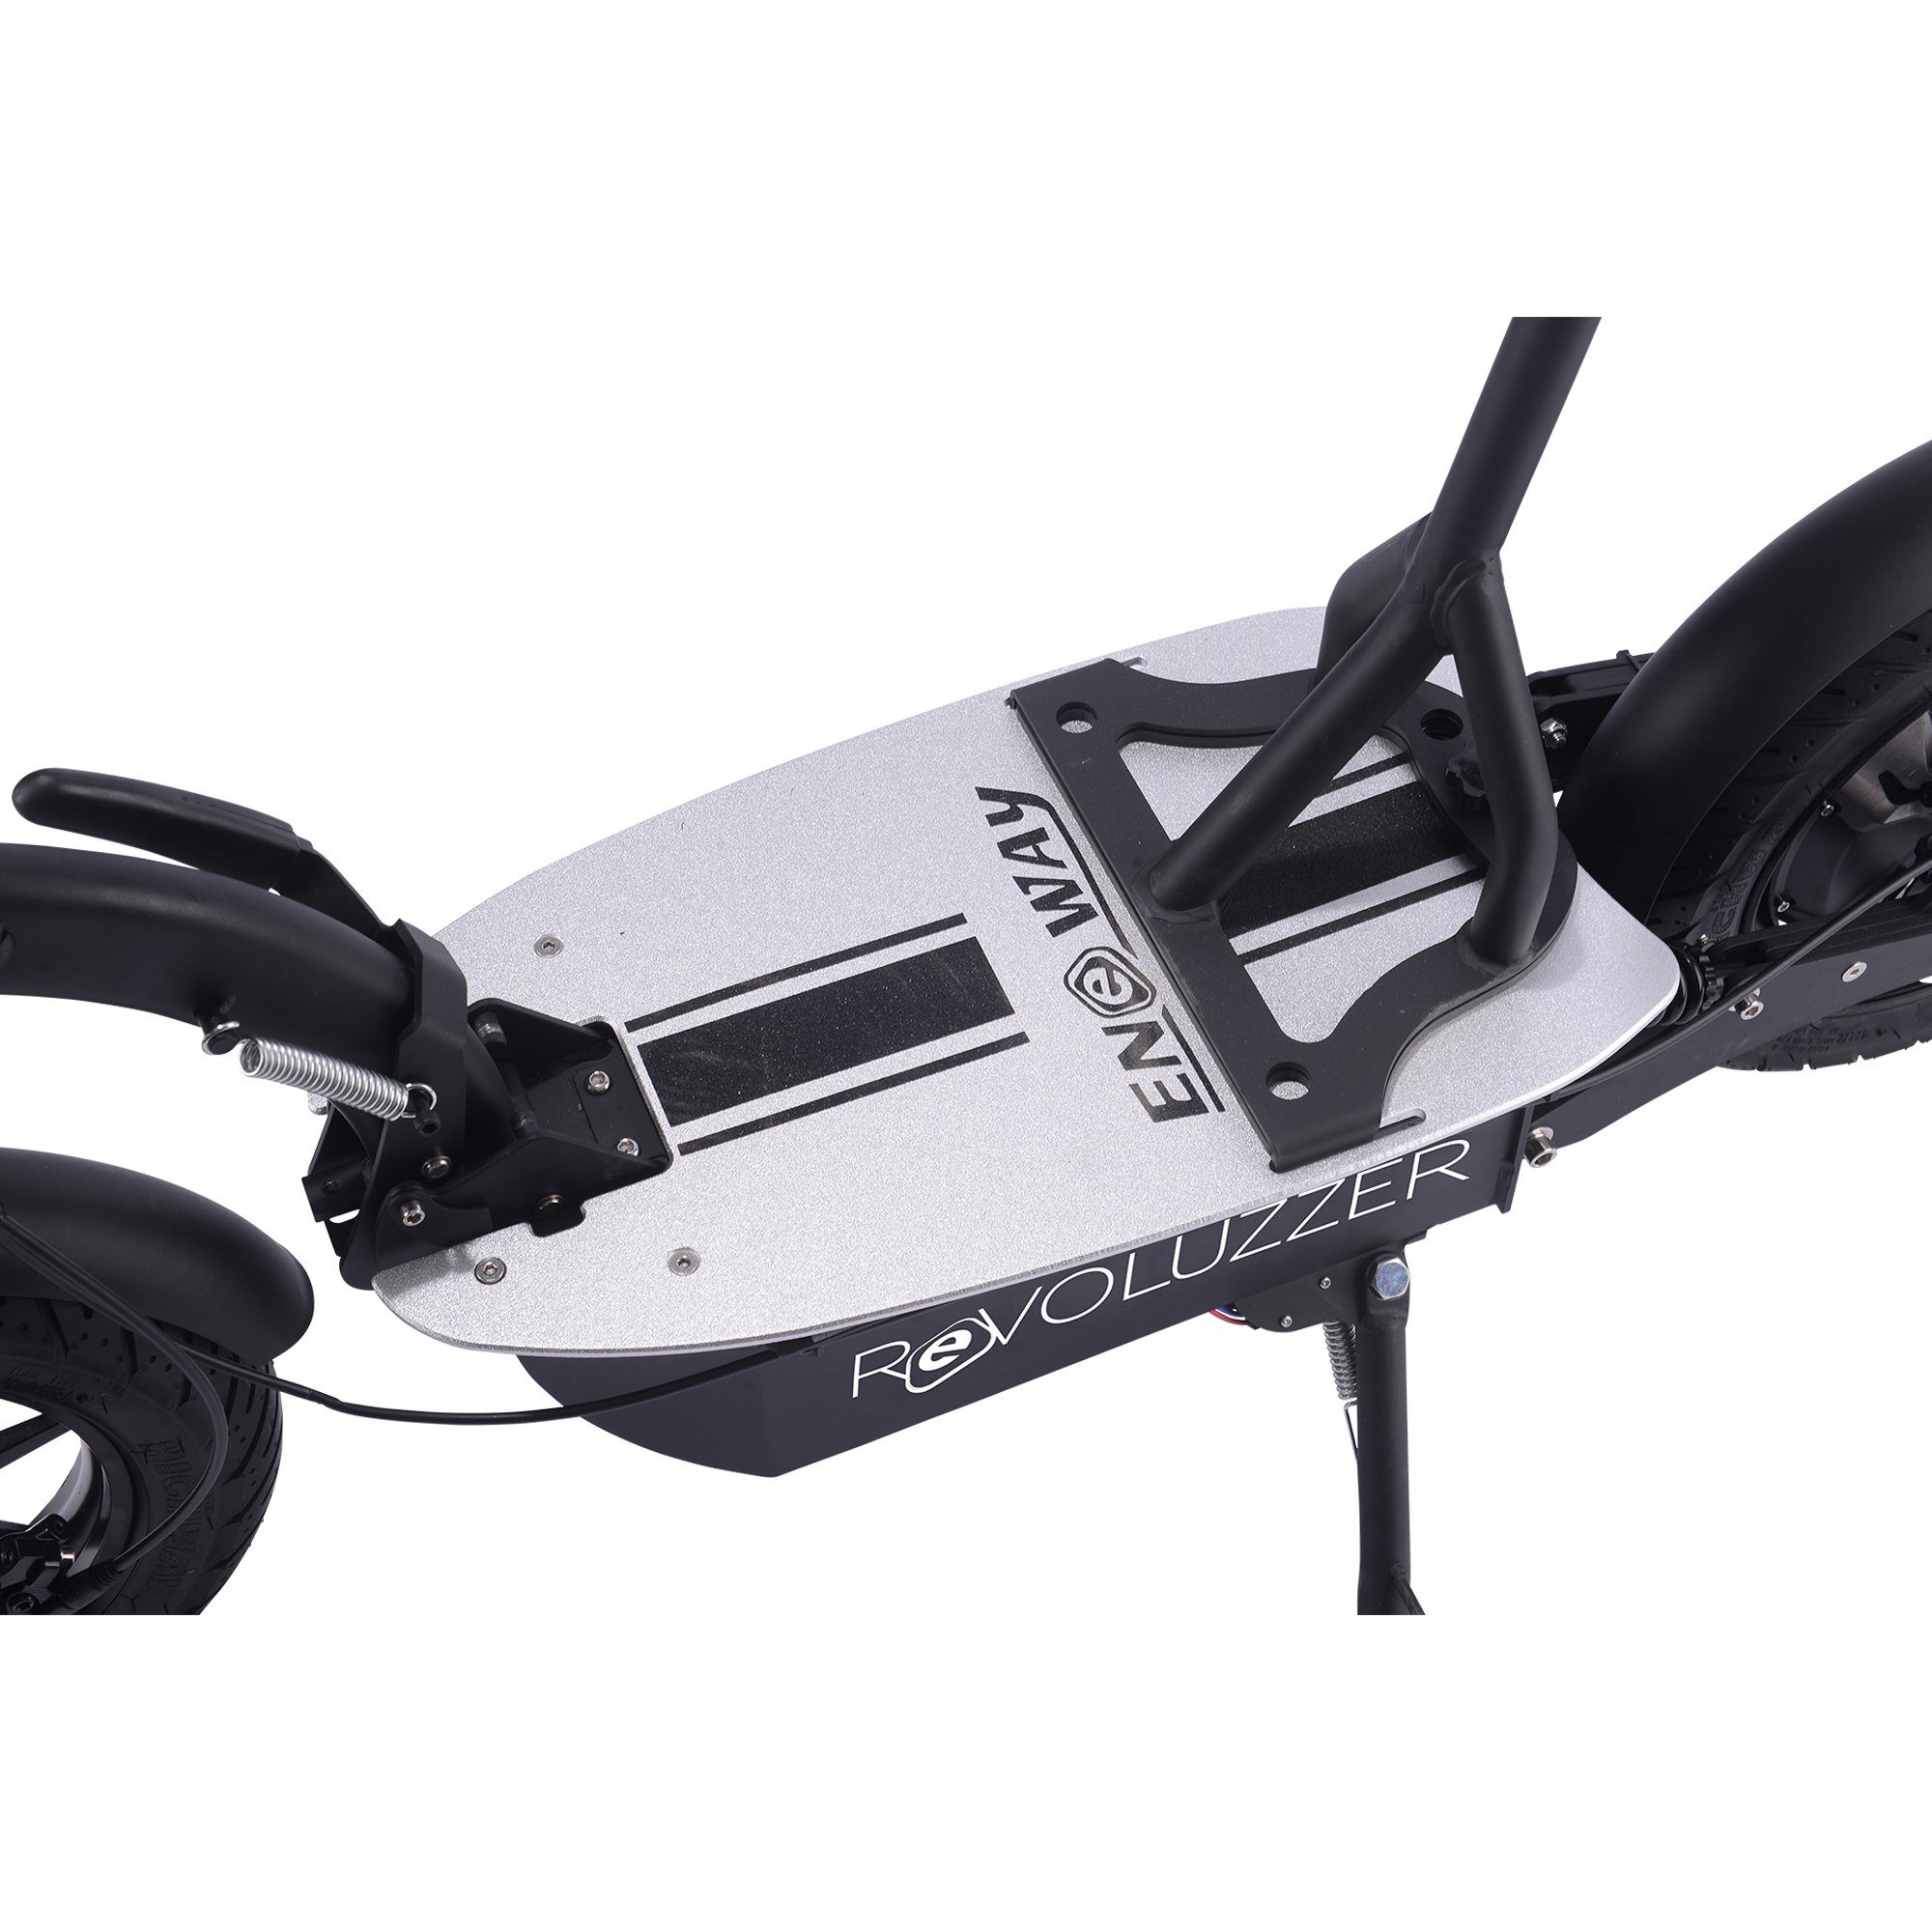 ENEWAY E-Scooter DER REVOLUZZER plus 1200W 3.5 zugelassen laut EScooter plus BleiGel), BleiGel, 48V km/h, 45km/h 45,00 45km/h 18AH 1200W 18AH 3.5 StVZO - 45 Revoluzzer - (Set